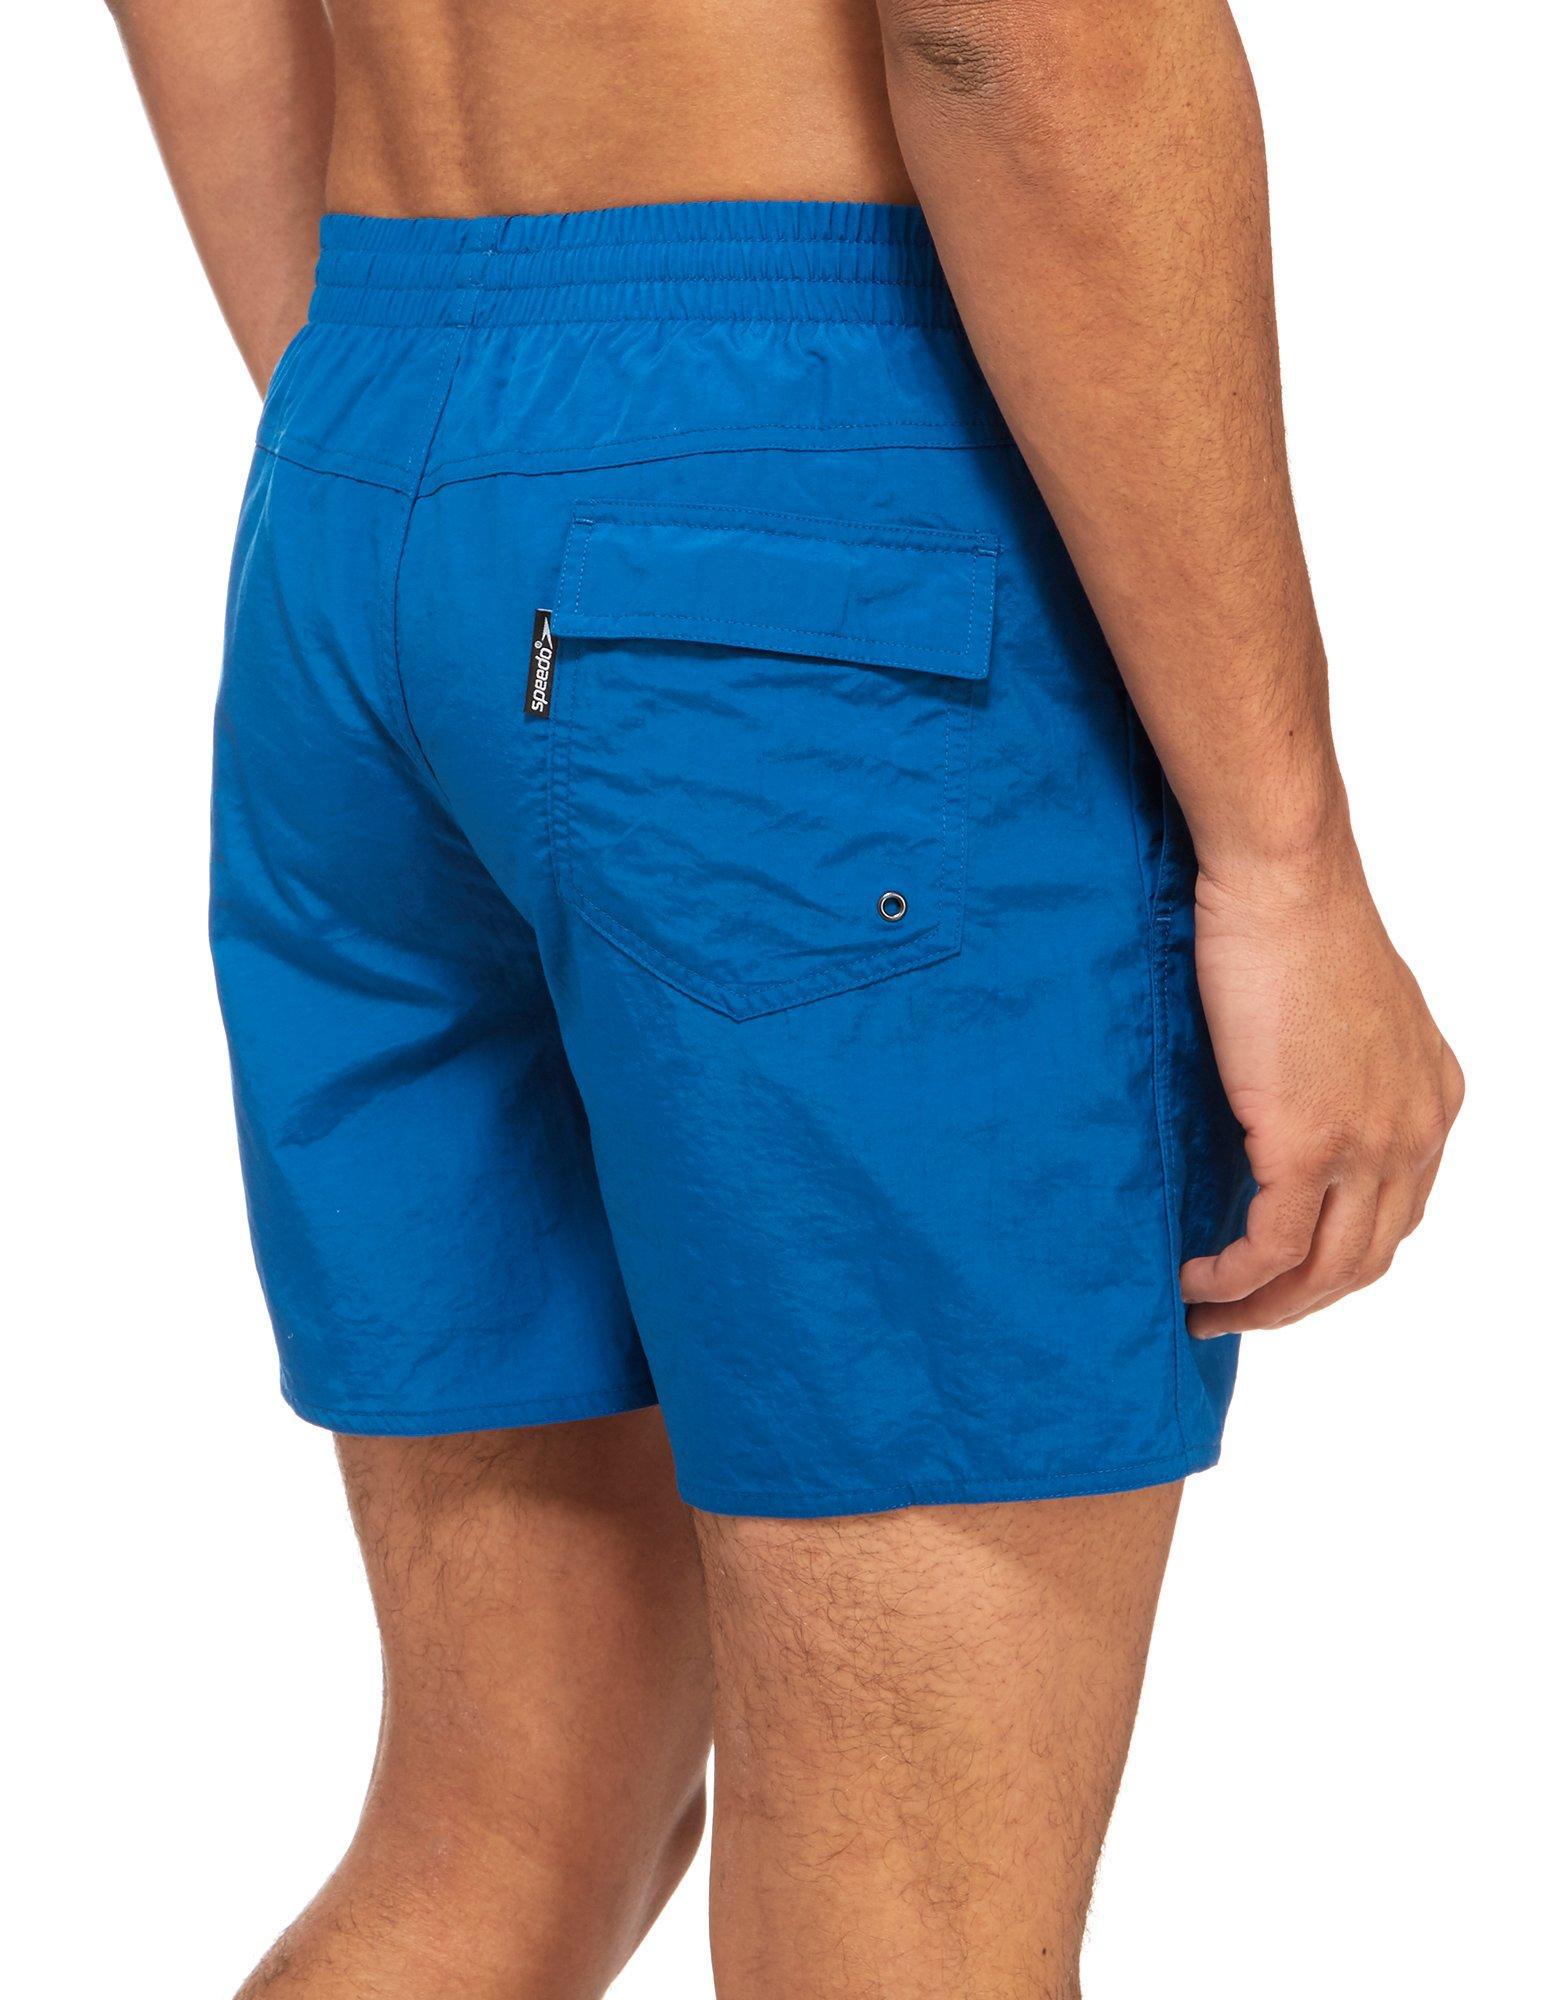 Lyst - Speedo Solid Leisure Swim Shorts in Blue for Men